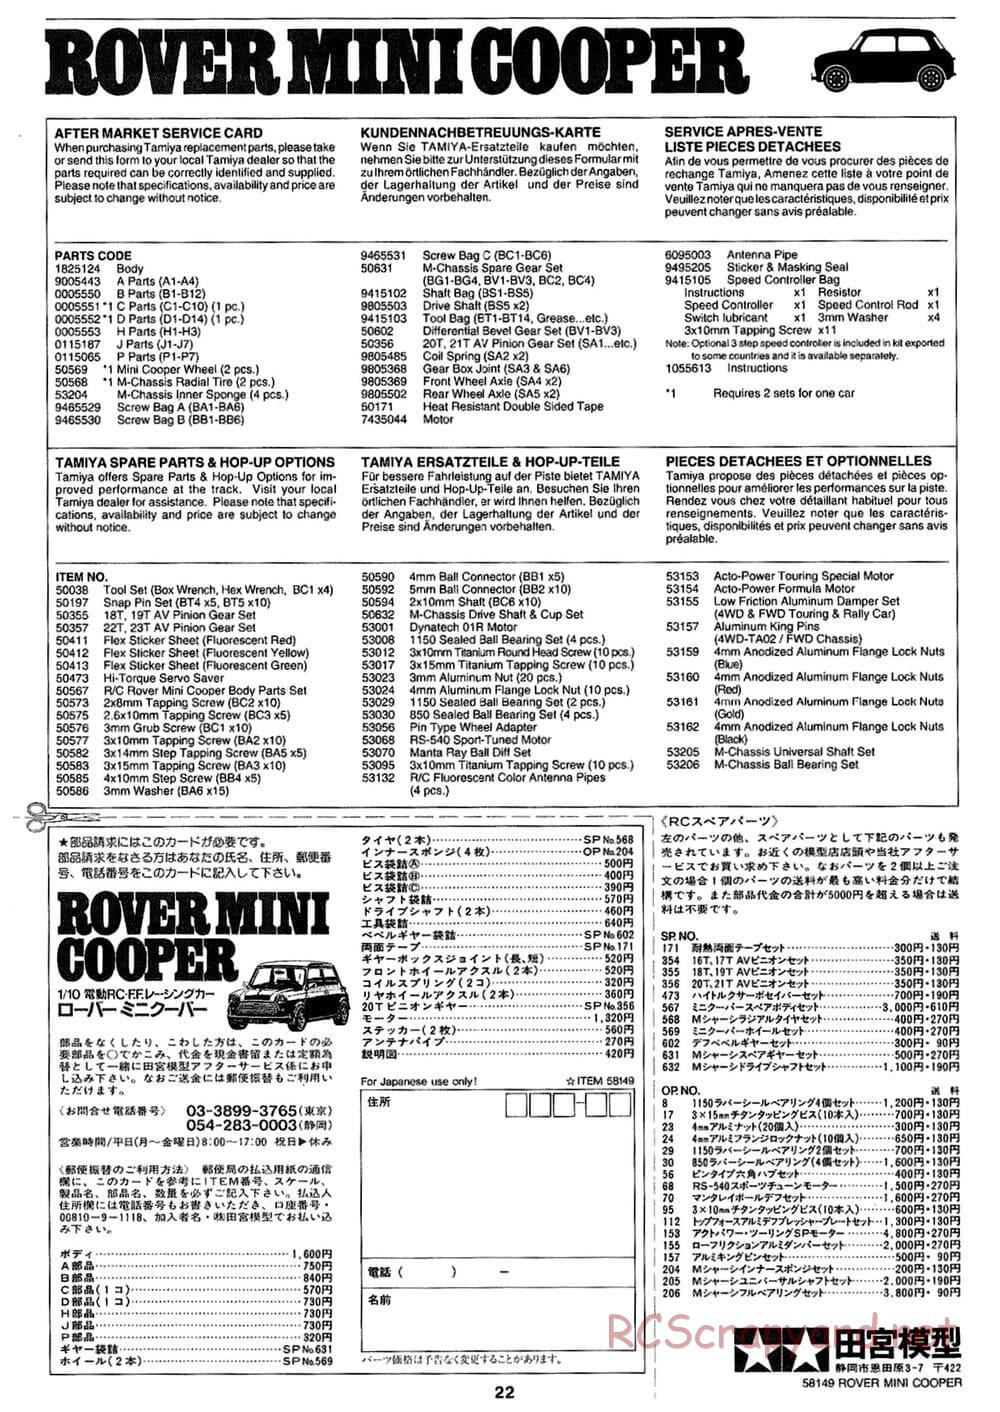 Tamiya - Rover Mini Cooper - M01 Chassis - Manual - Page 22